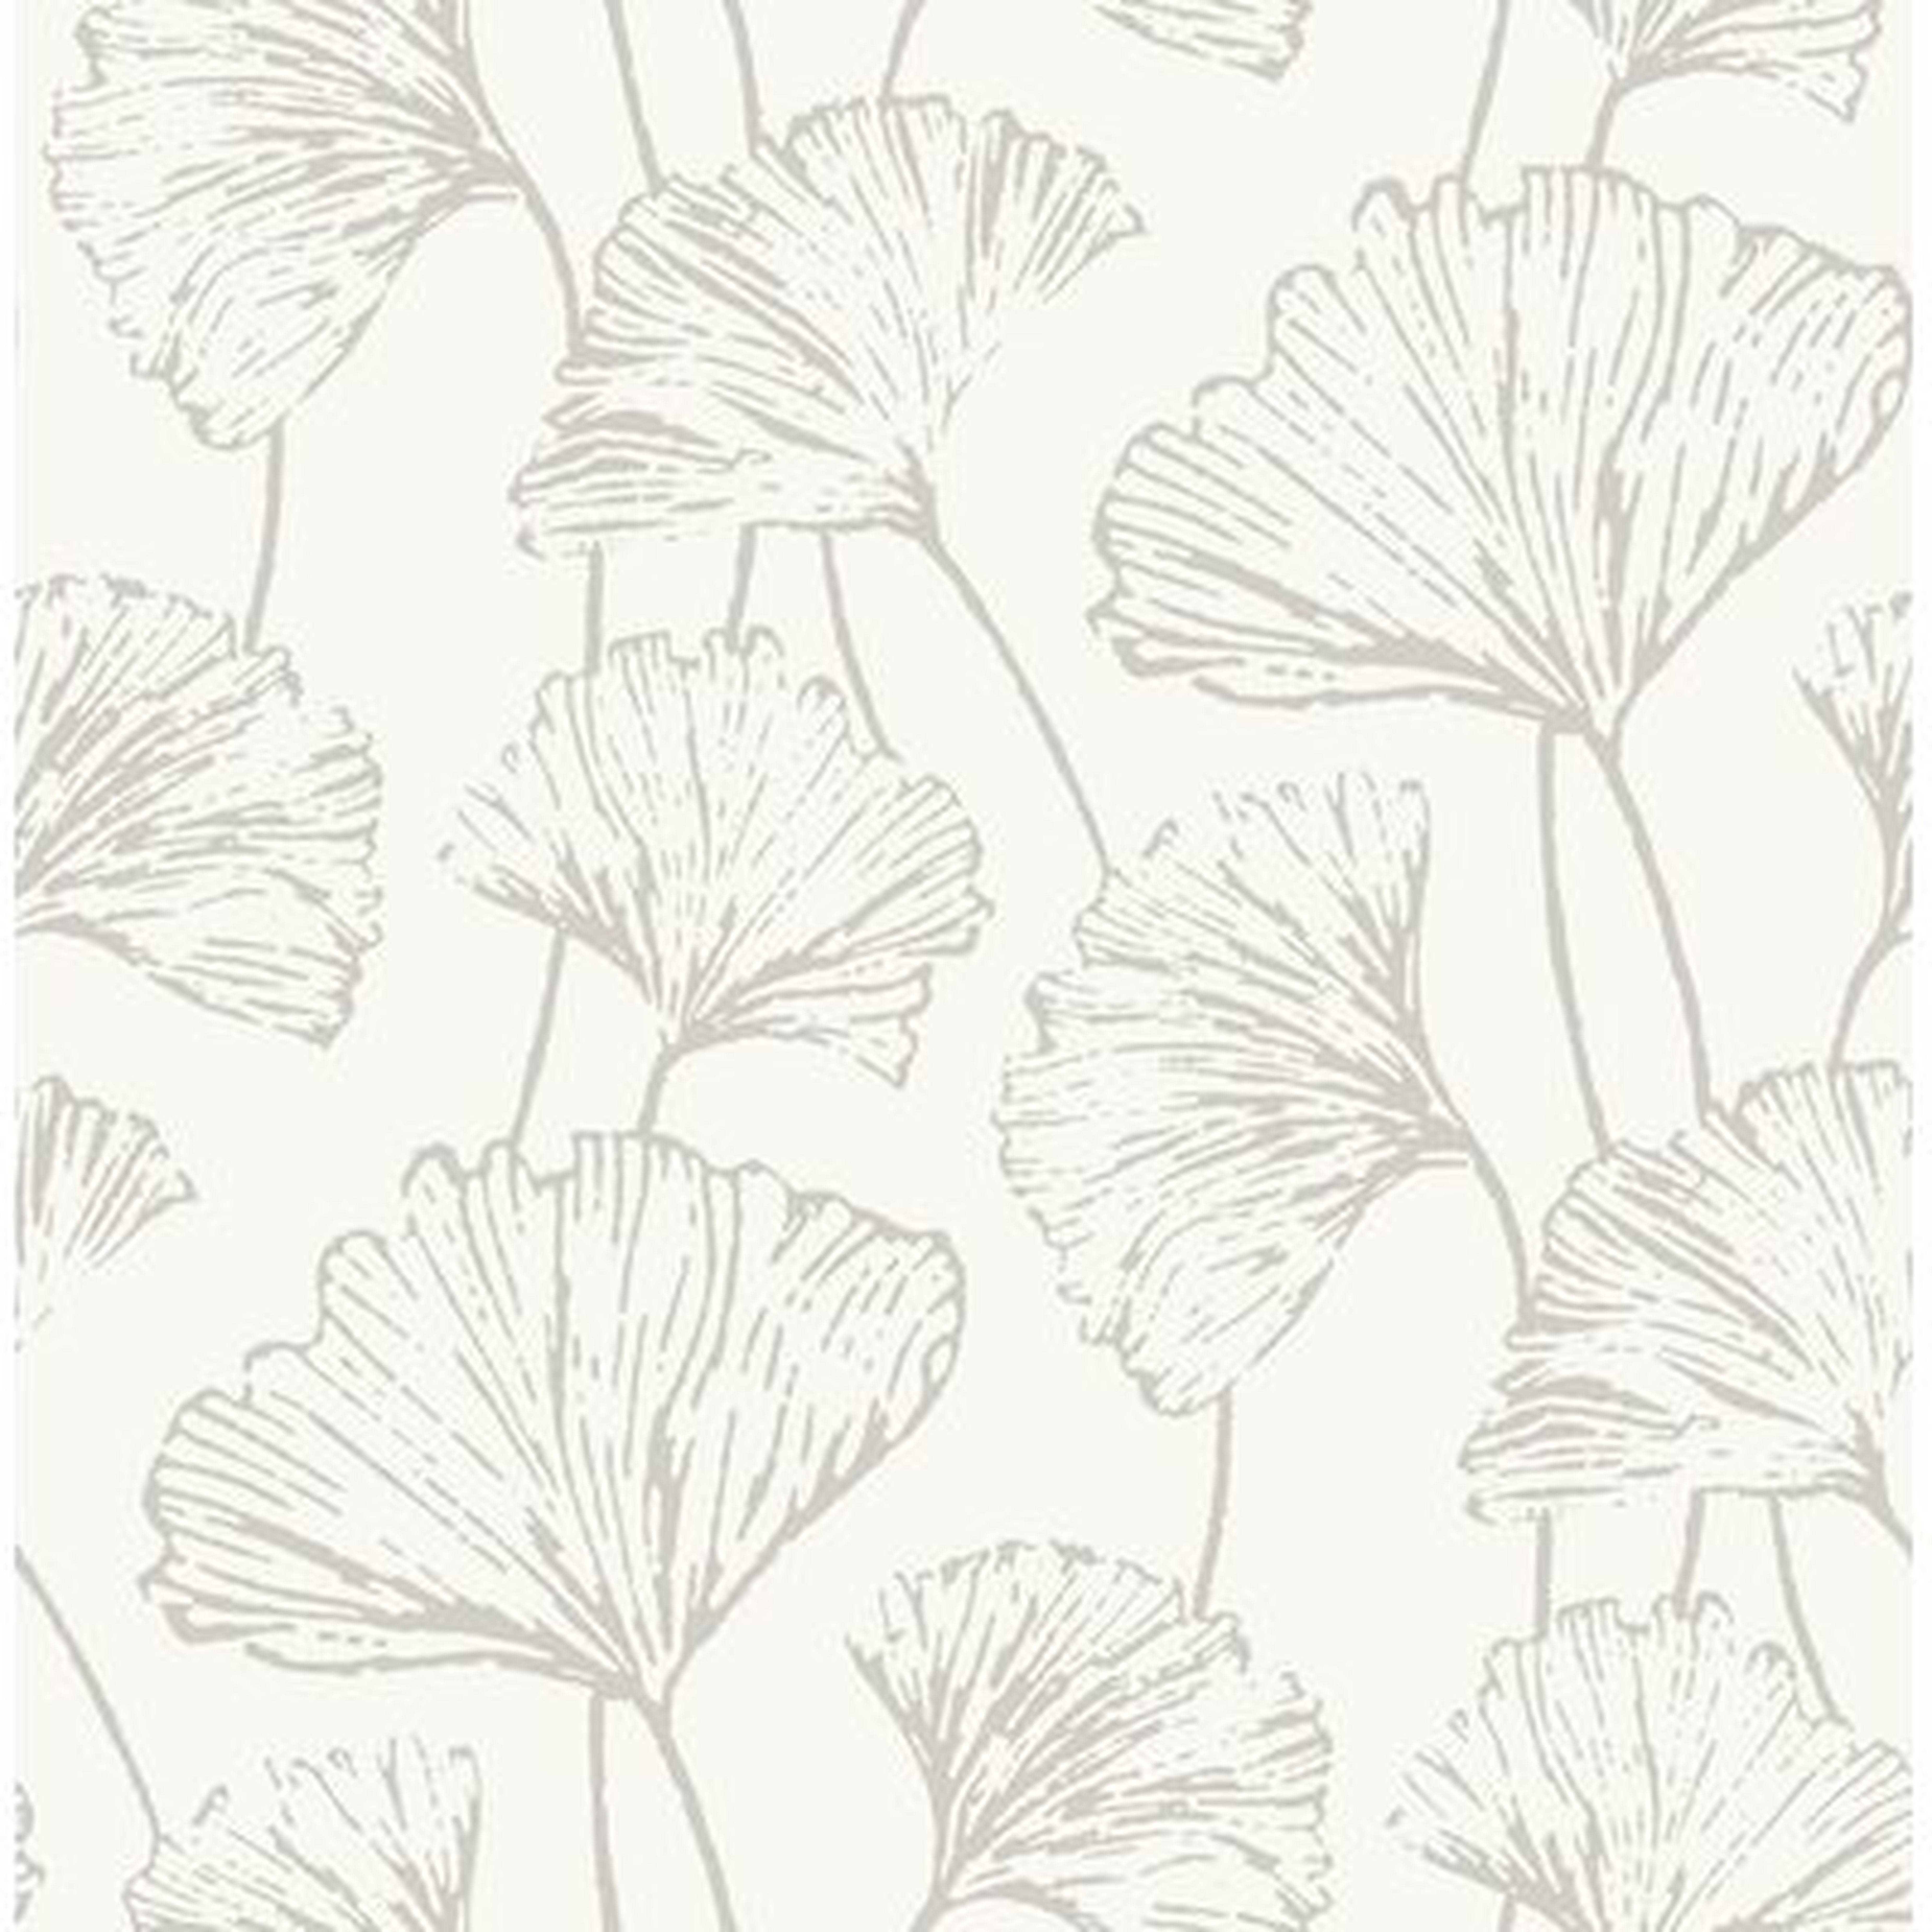 Leslie Ginkgo 33' L x 20.5" W Floral and Botanical Wallpaper Roll - AllModern